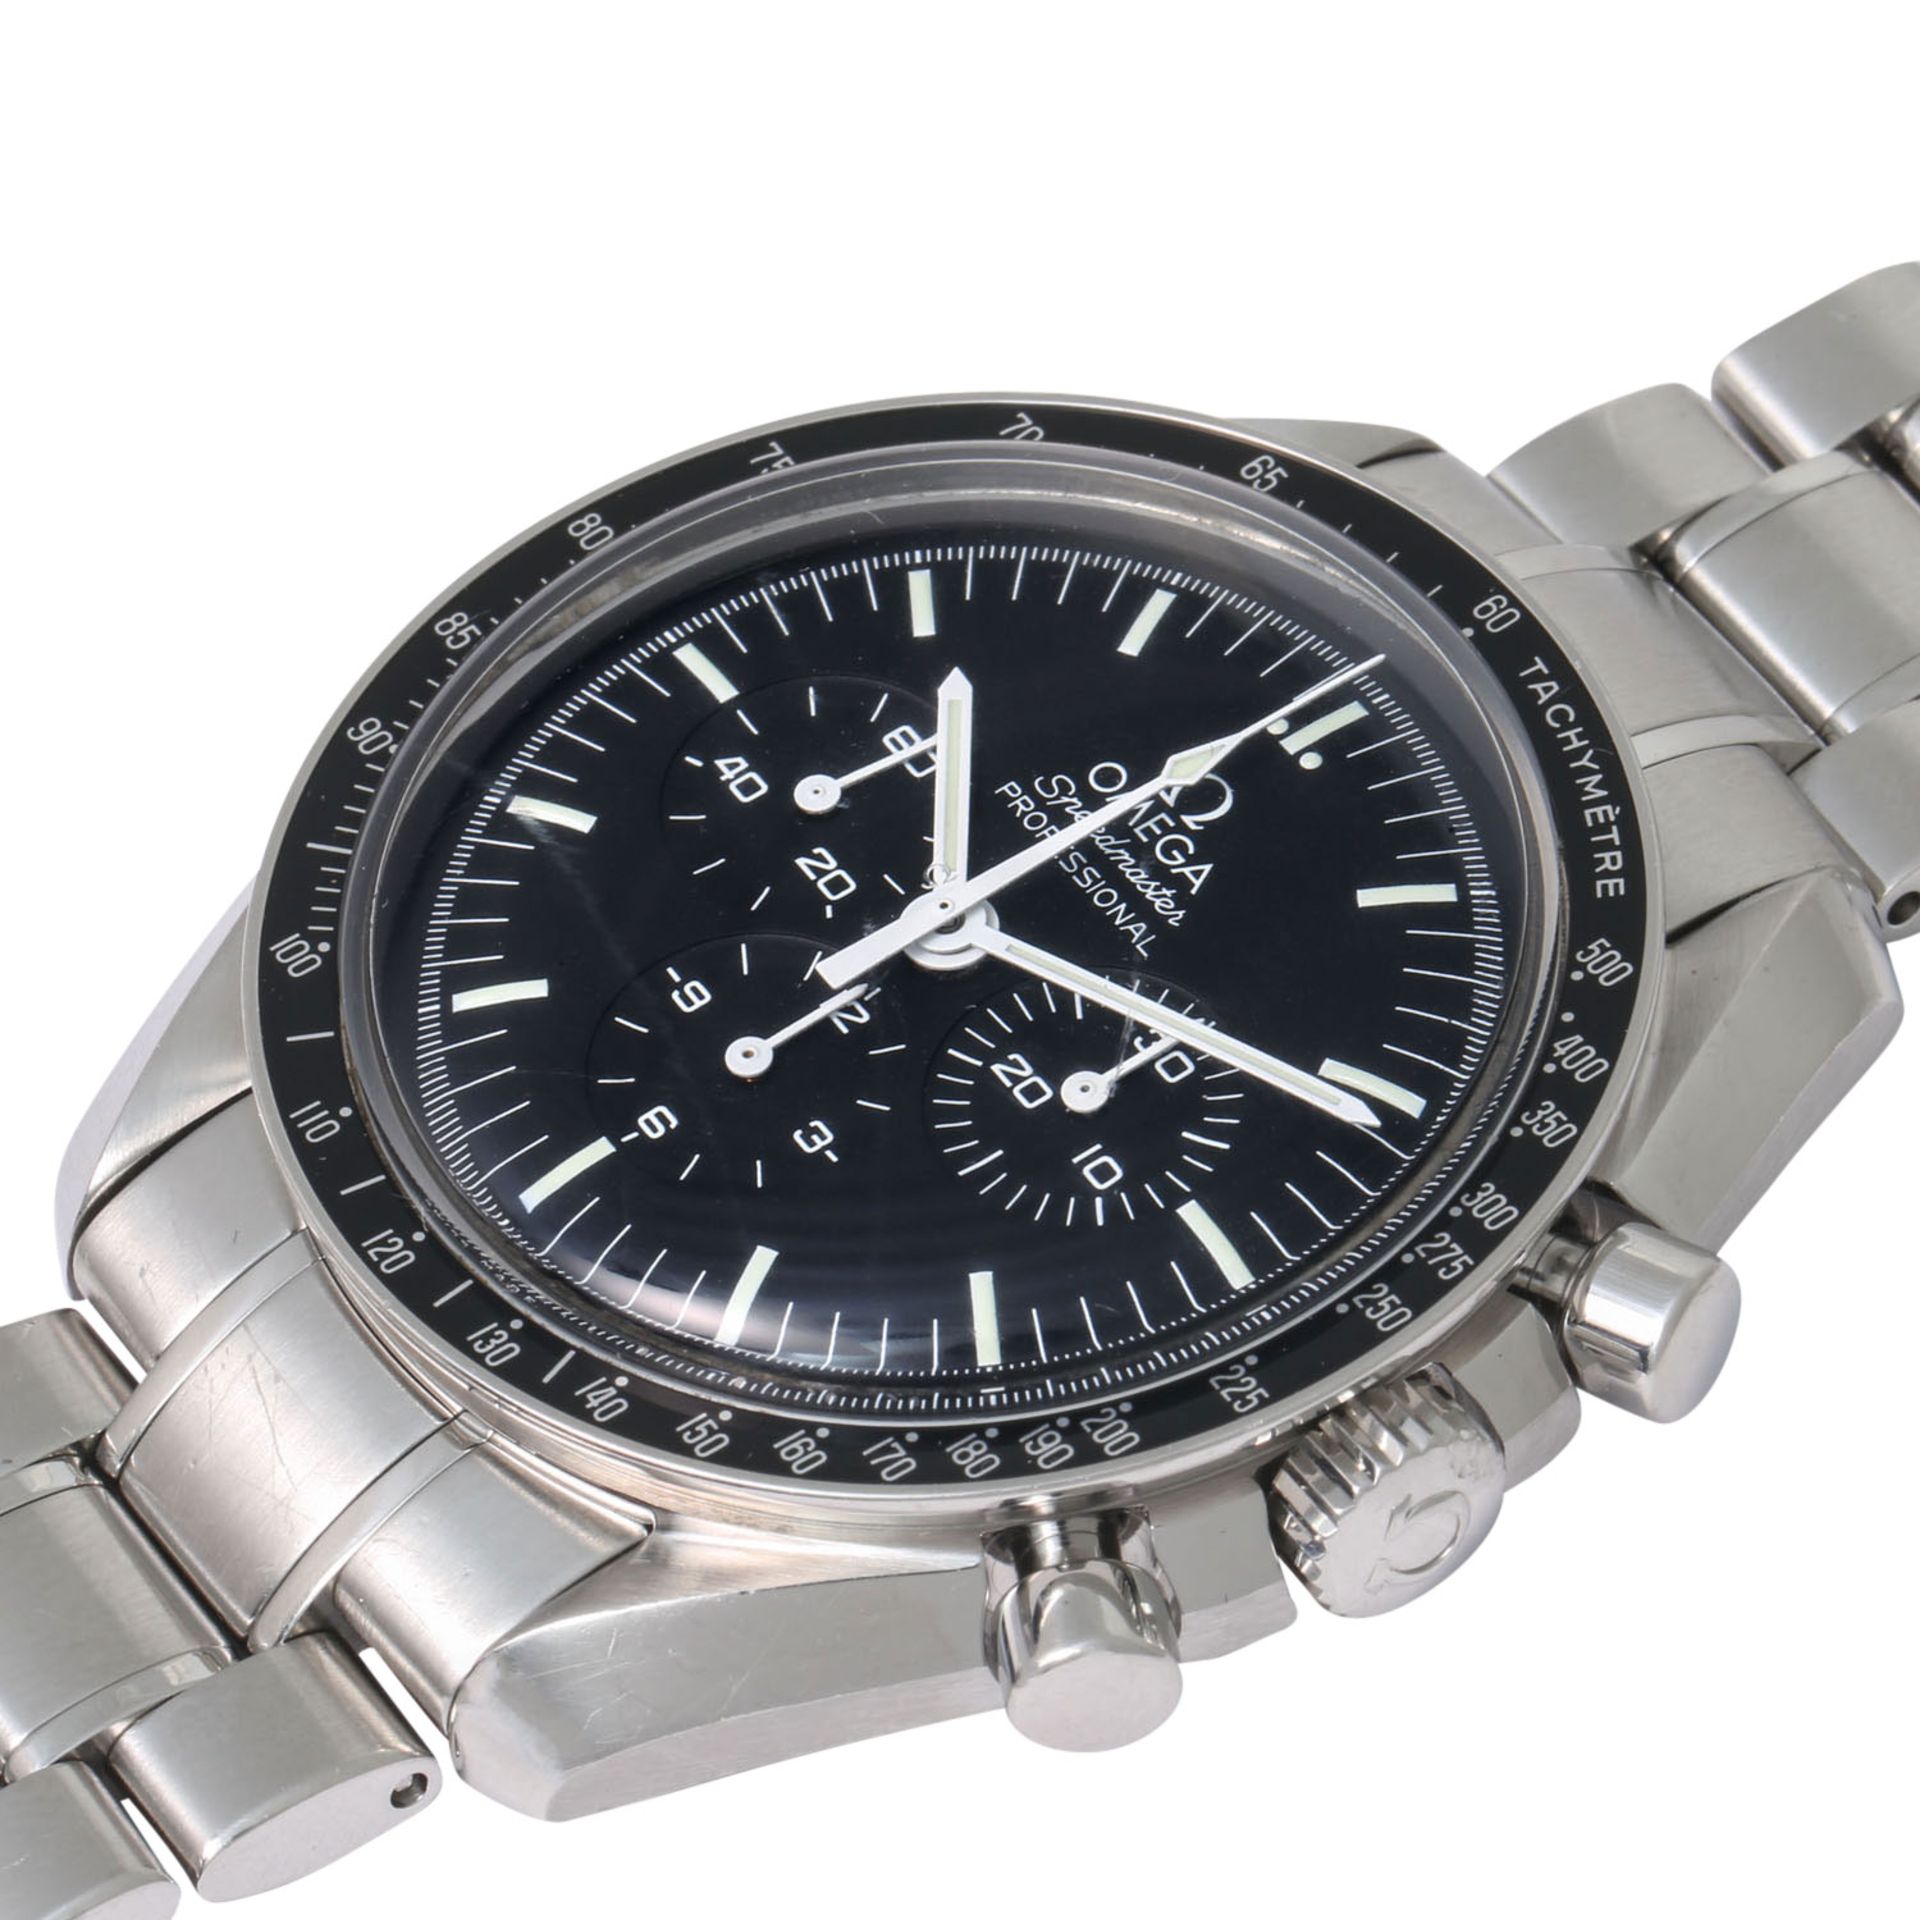 OMEGA Speedmaster Professional Moonwatch Chronograph, Ref. 3570.50.00. Armbanduhr. - Image 5 of 9